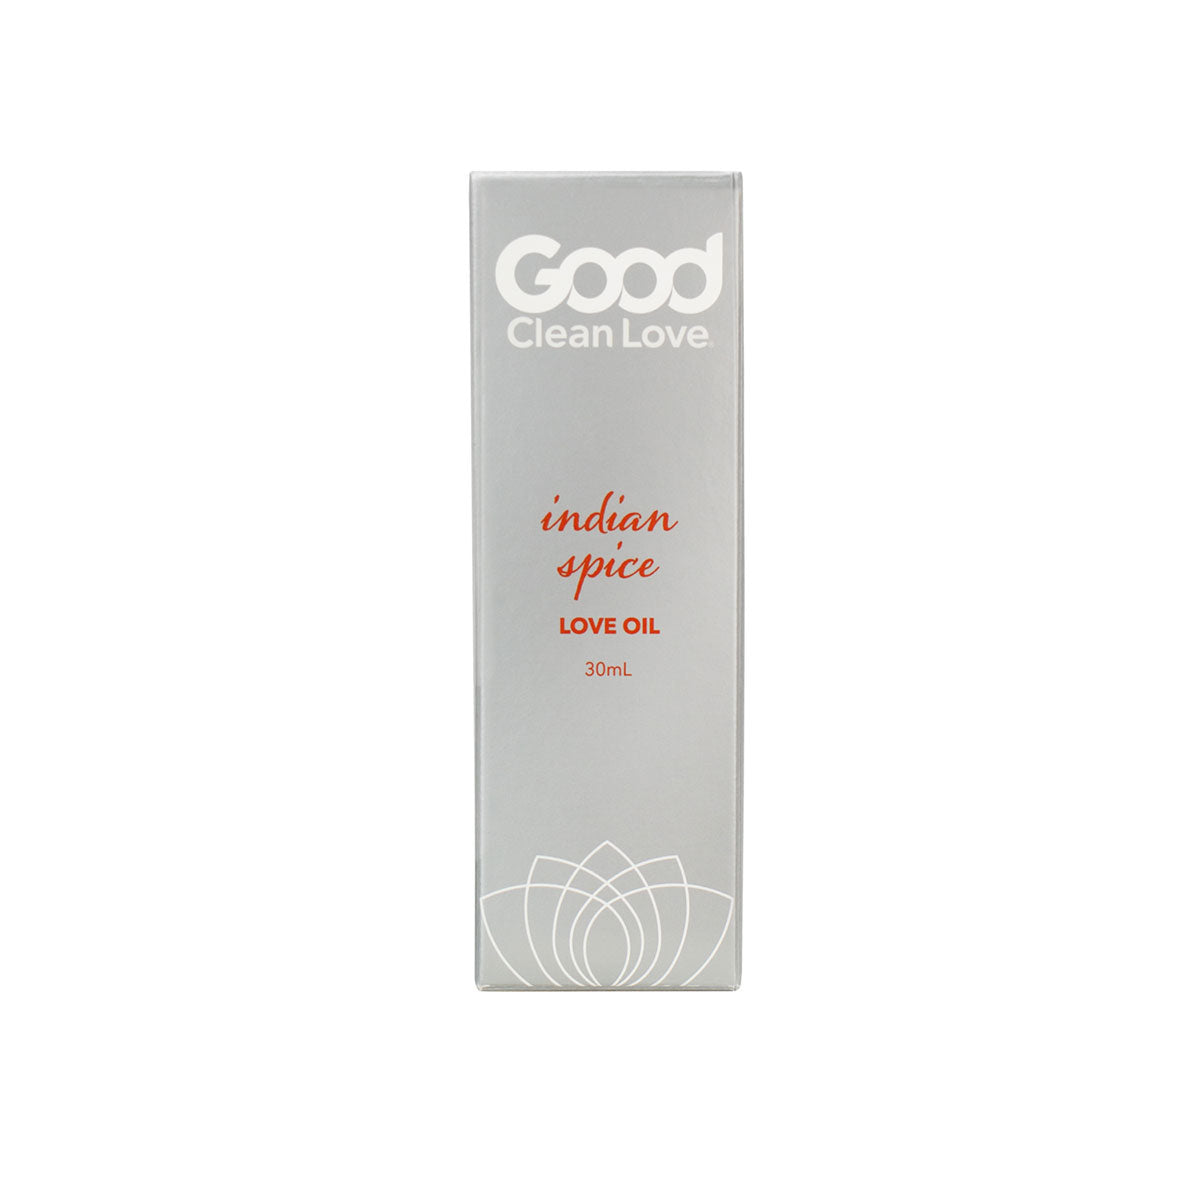 Good Clean Love Oil 30ml - Indian Spice